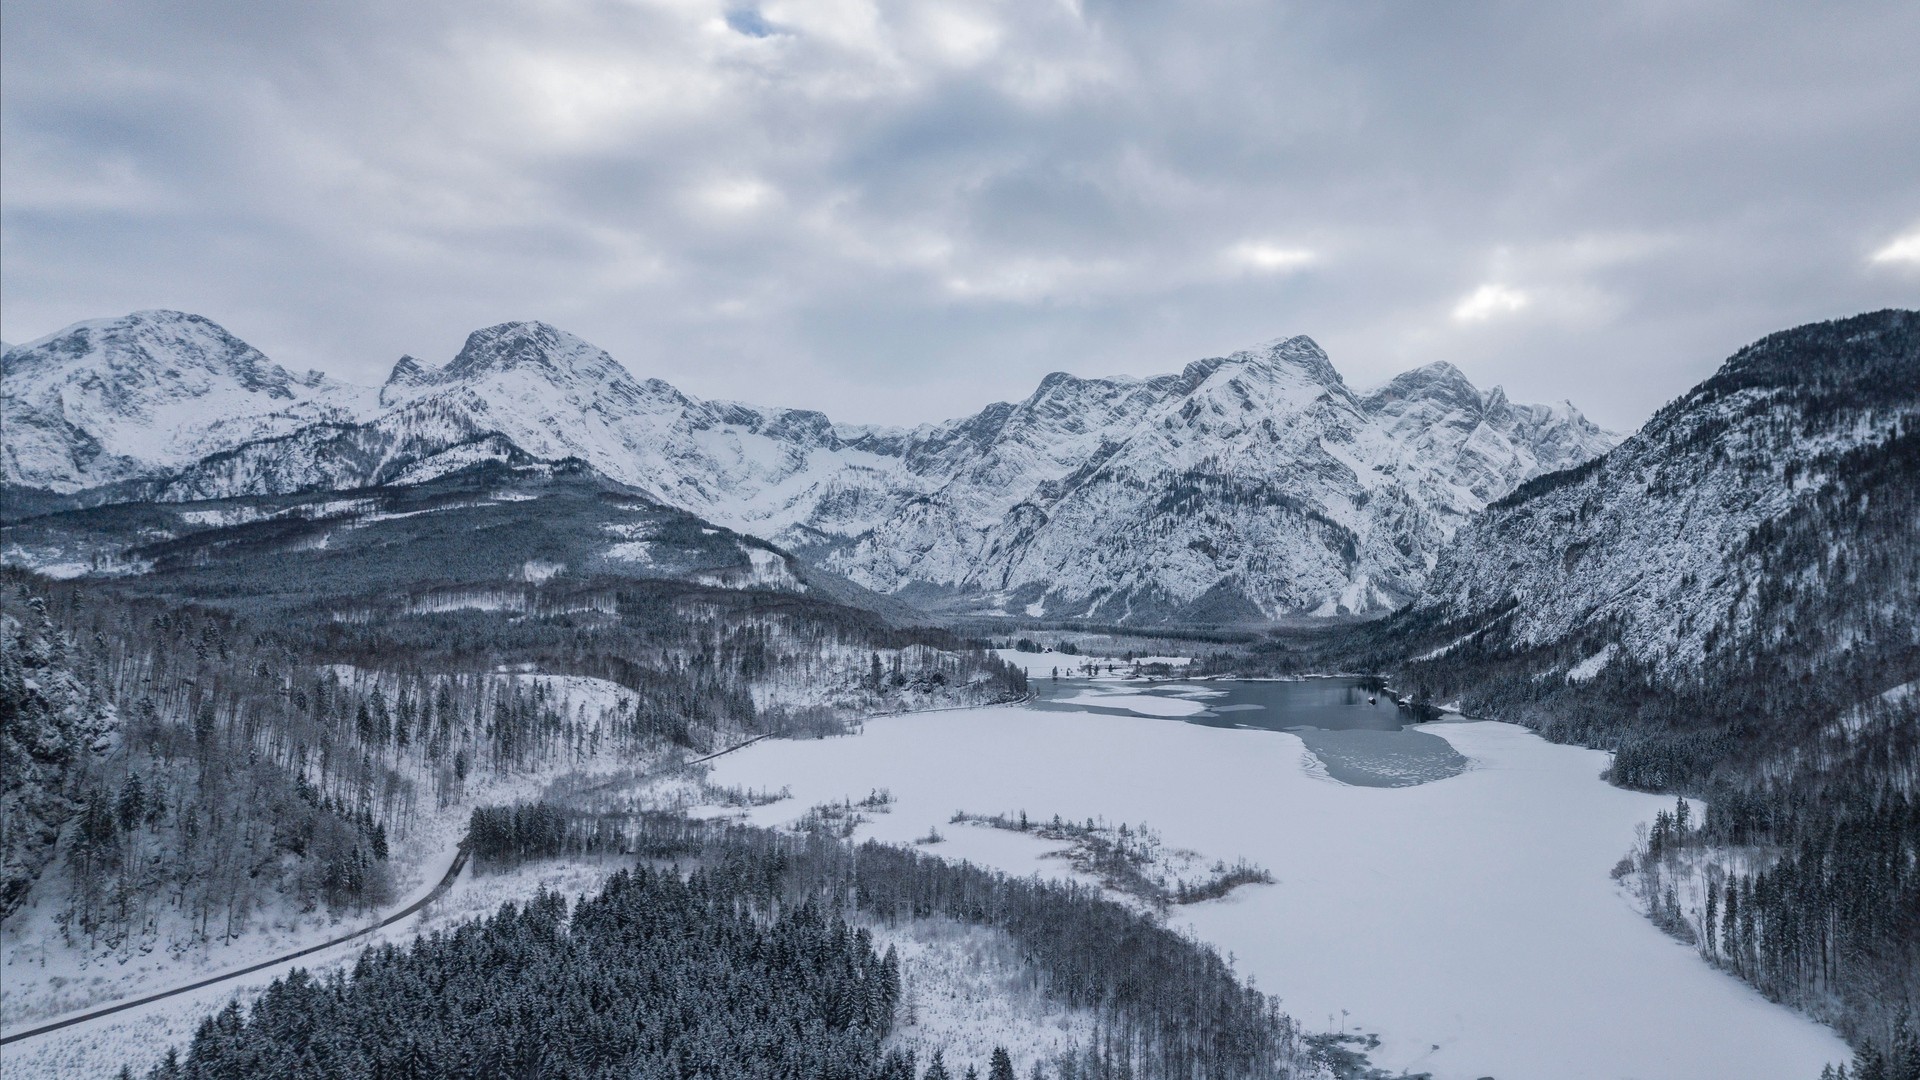 1920x1080 wallpapers: almsee, austria, mountains, winter, lake (image)